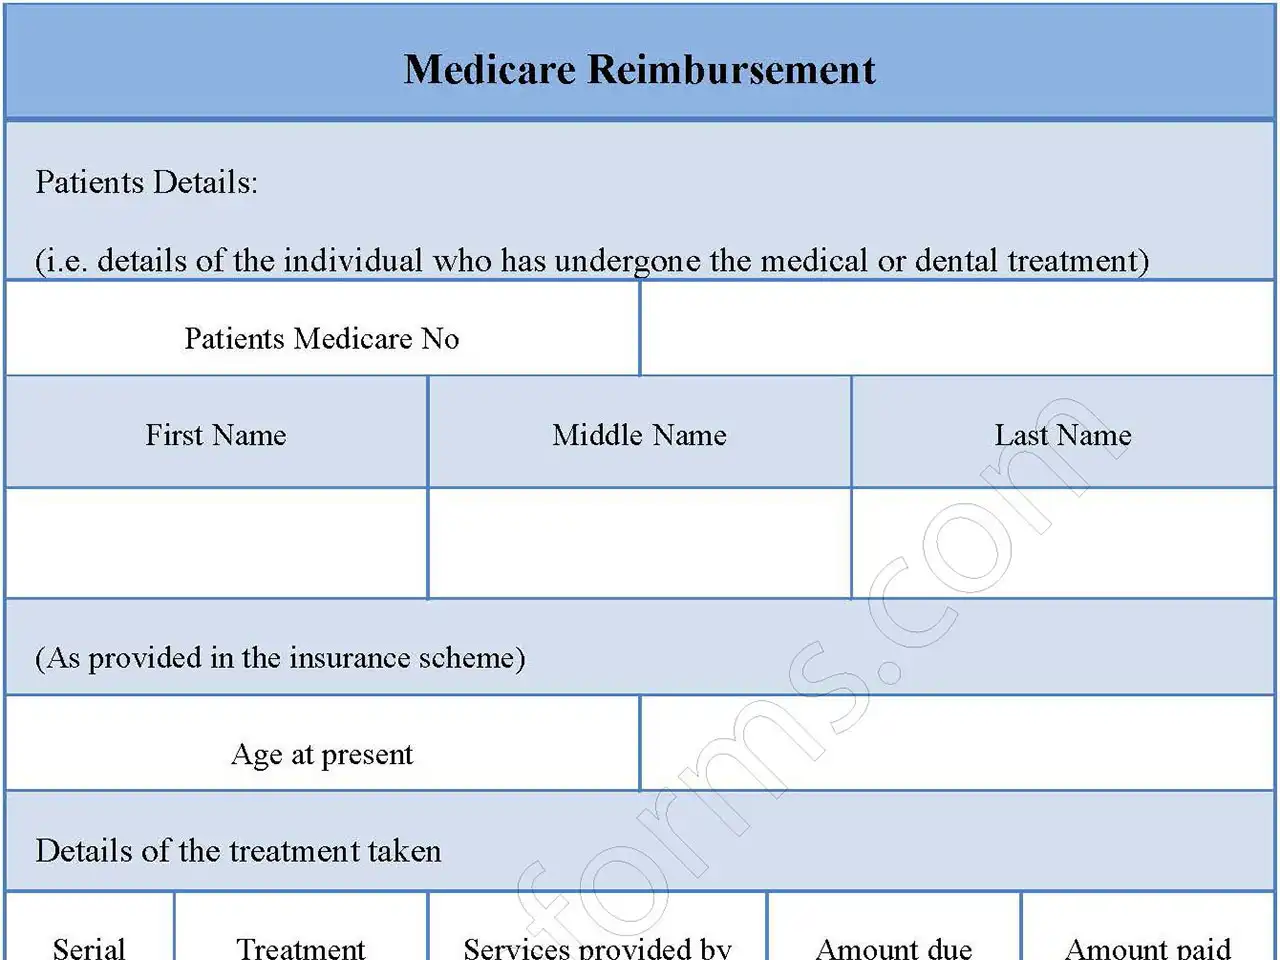 Medicare Reimbursement Form